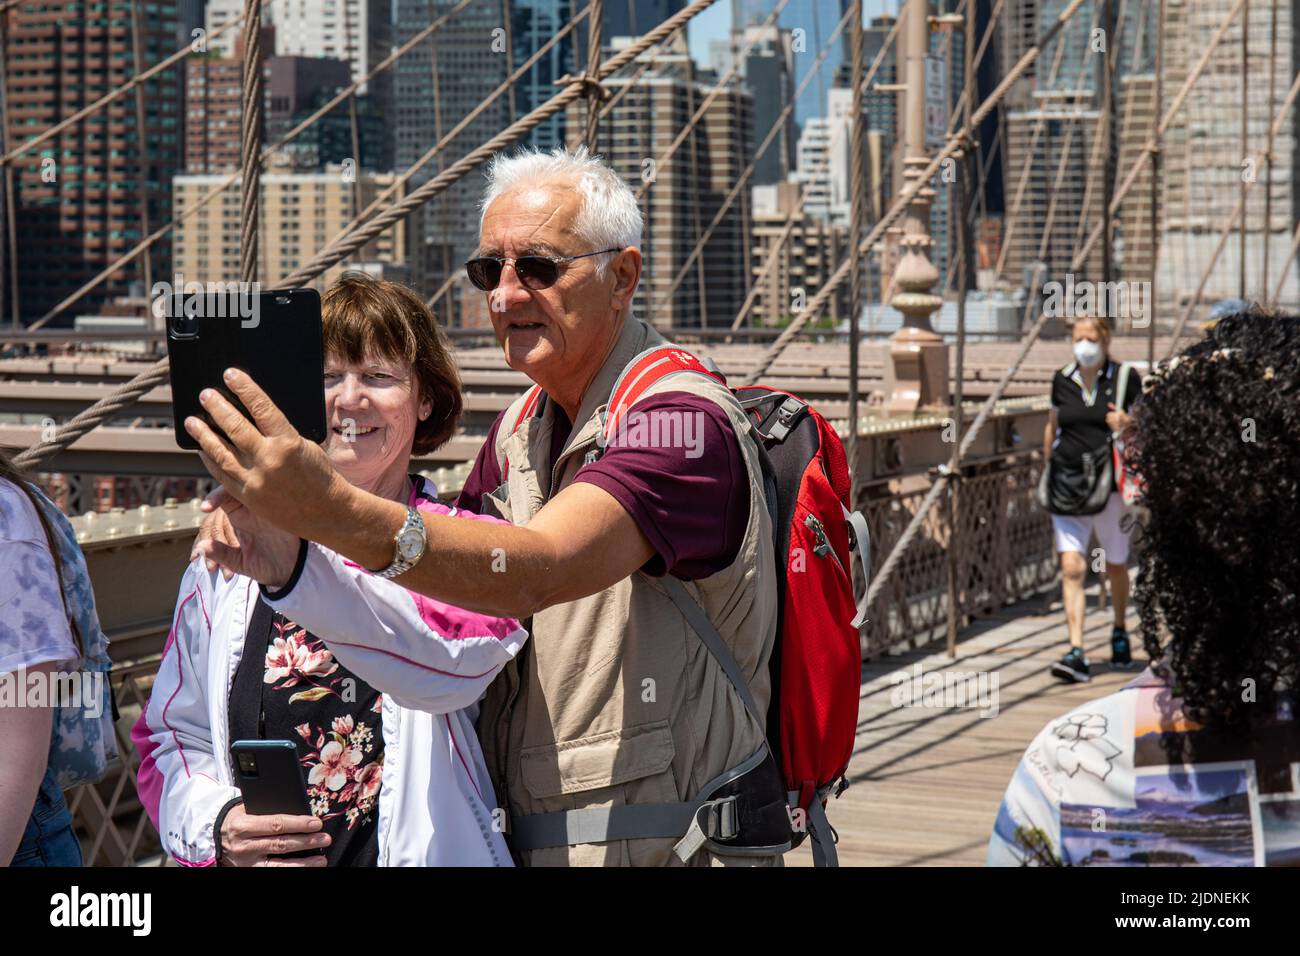 Elderly couple taking selfie on Brooklyn Bridge Pedestrian Walkway in New York City, United States of America Stock Photo